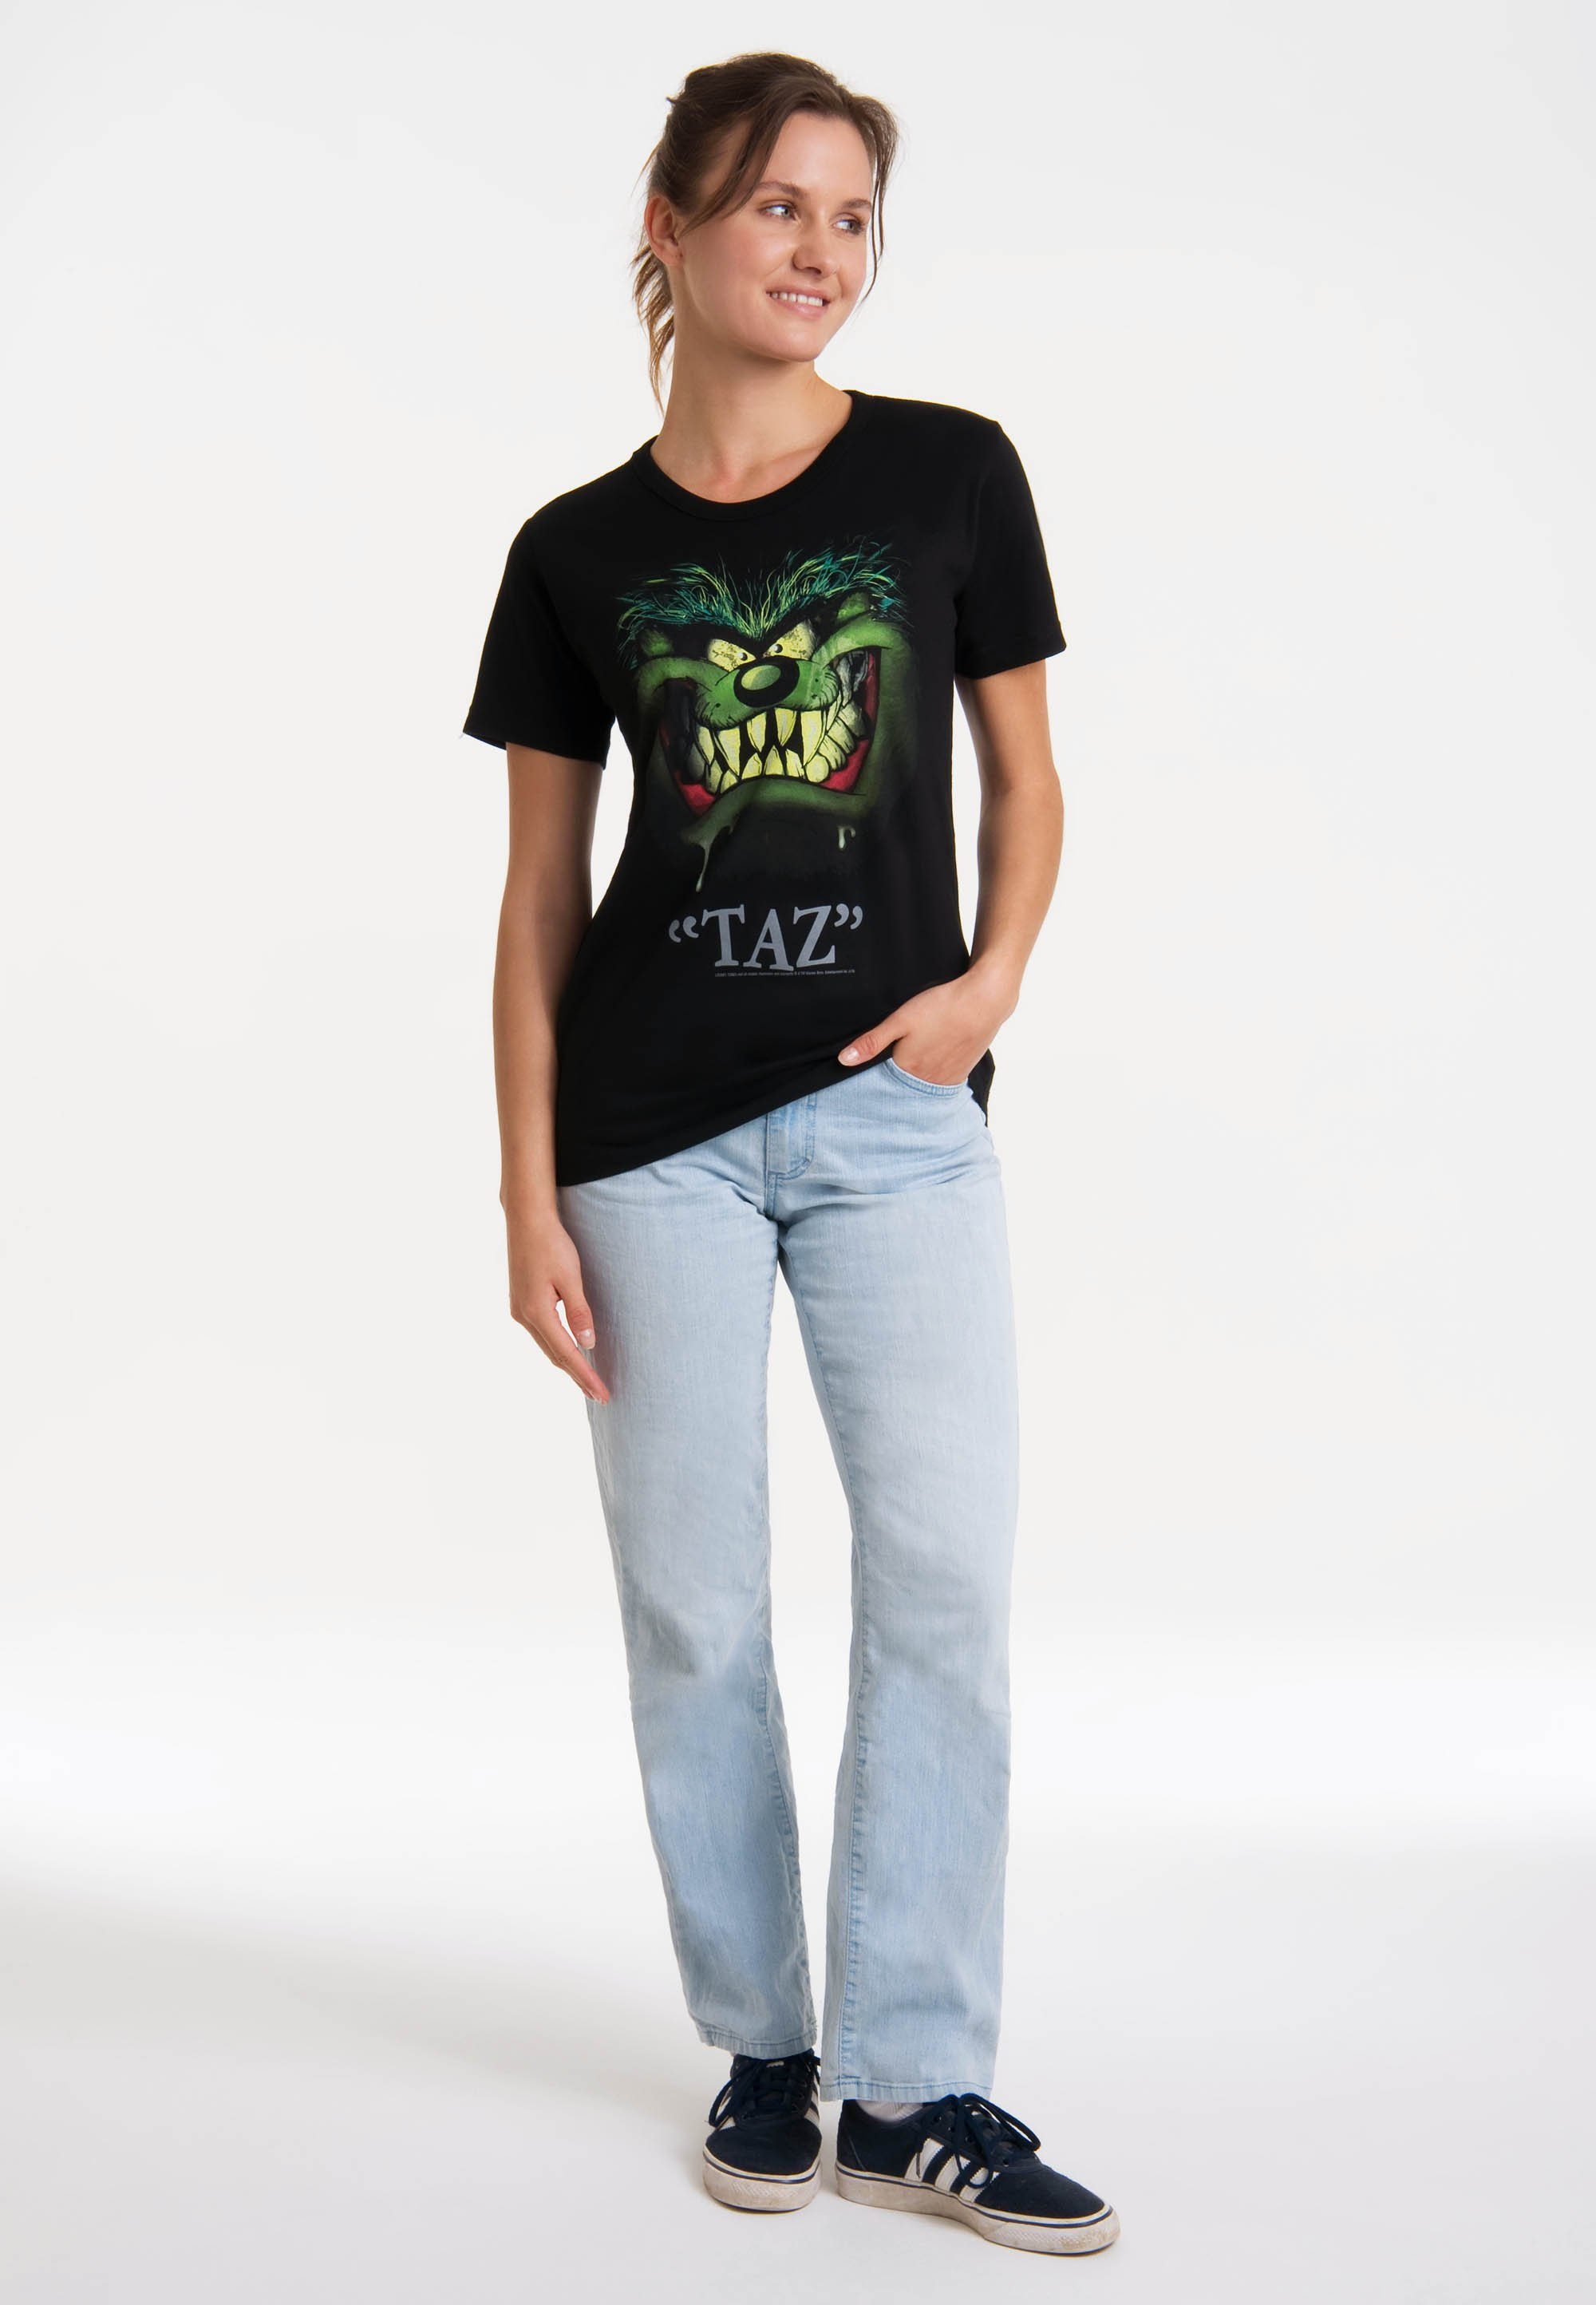 LOGOSHIRT T-Shirt Looney Print lizenziertem Tunes mit Taz - Portrait